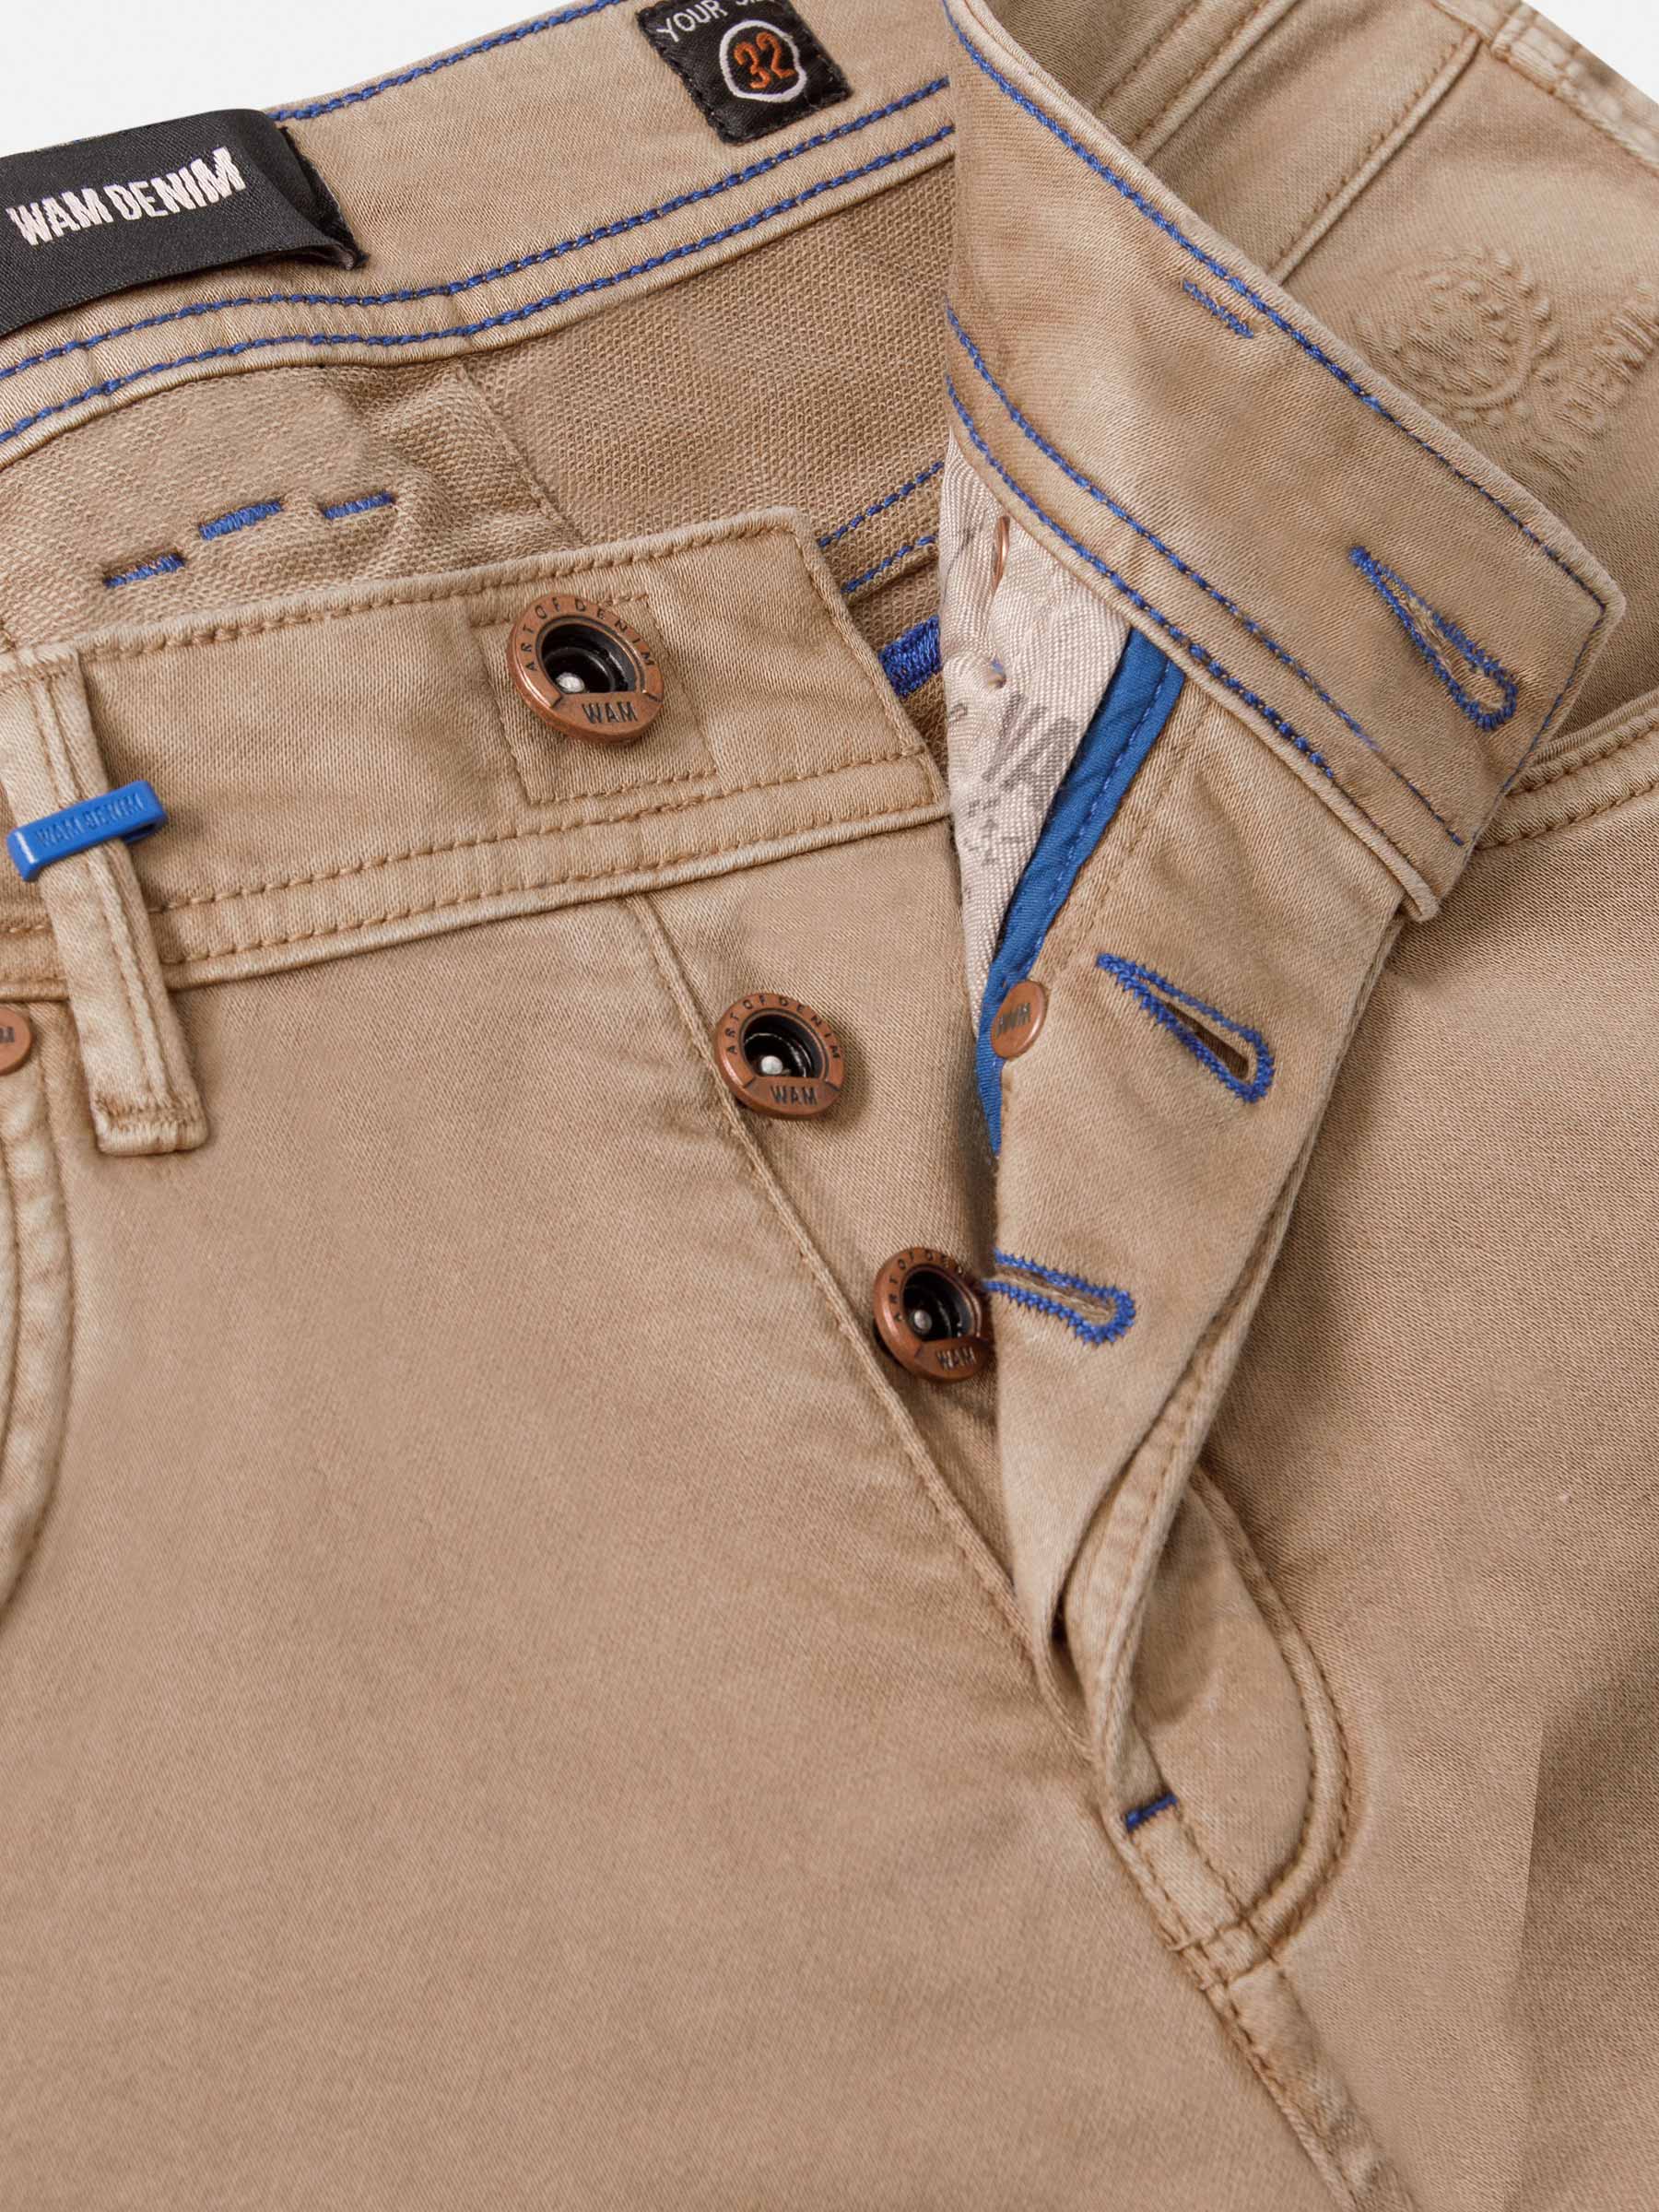 Sahara Button Closure Light Beige Jeans